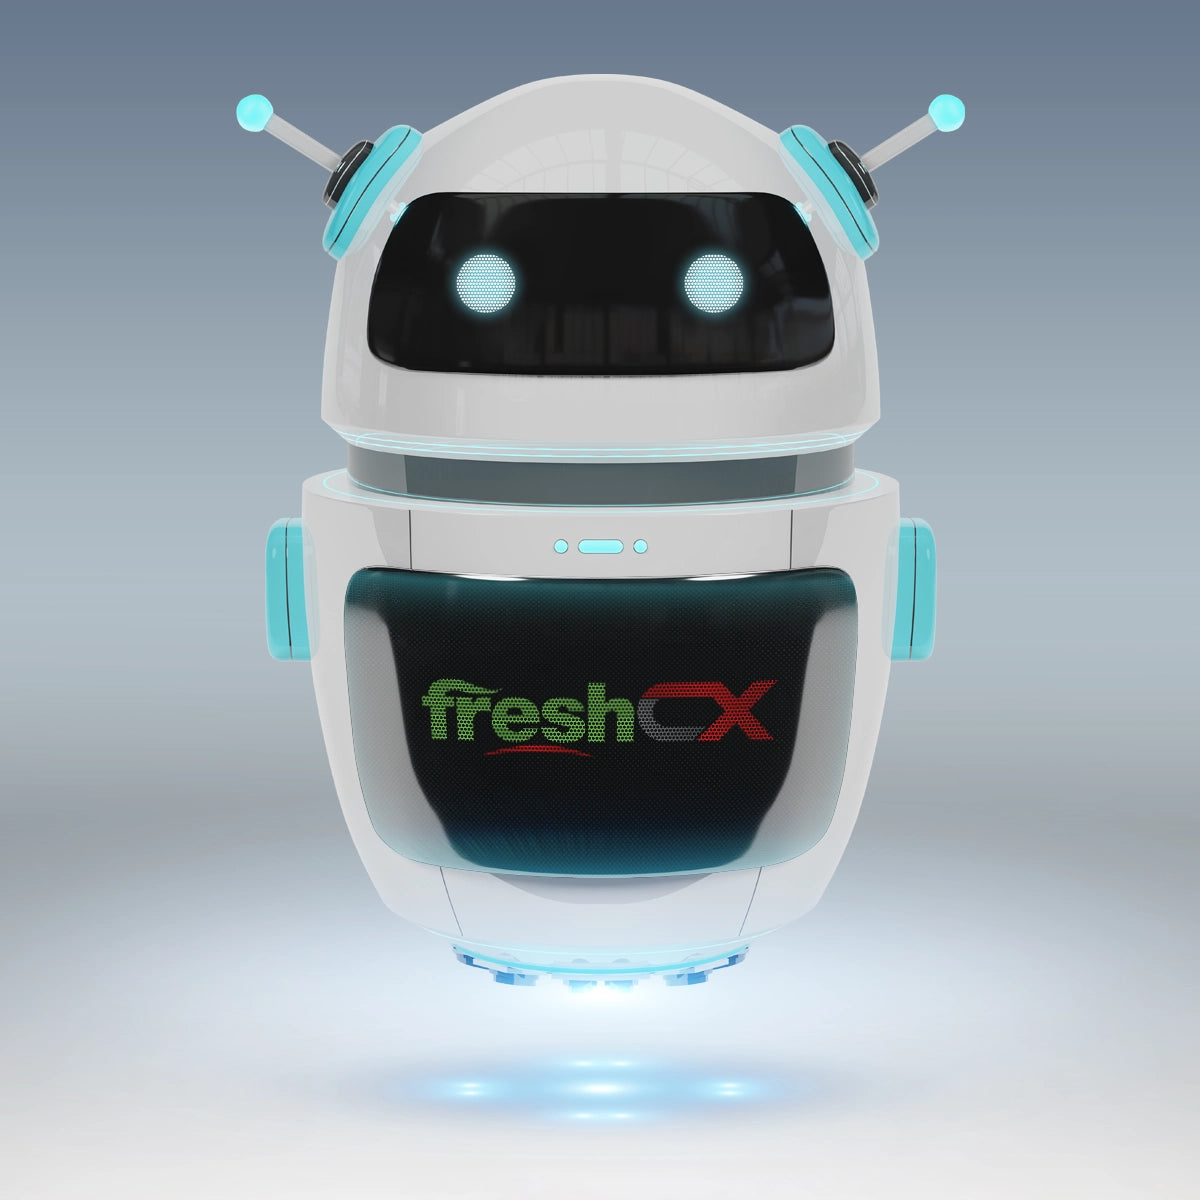 FRESHCX.COM